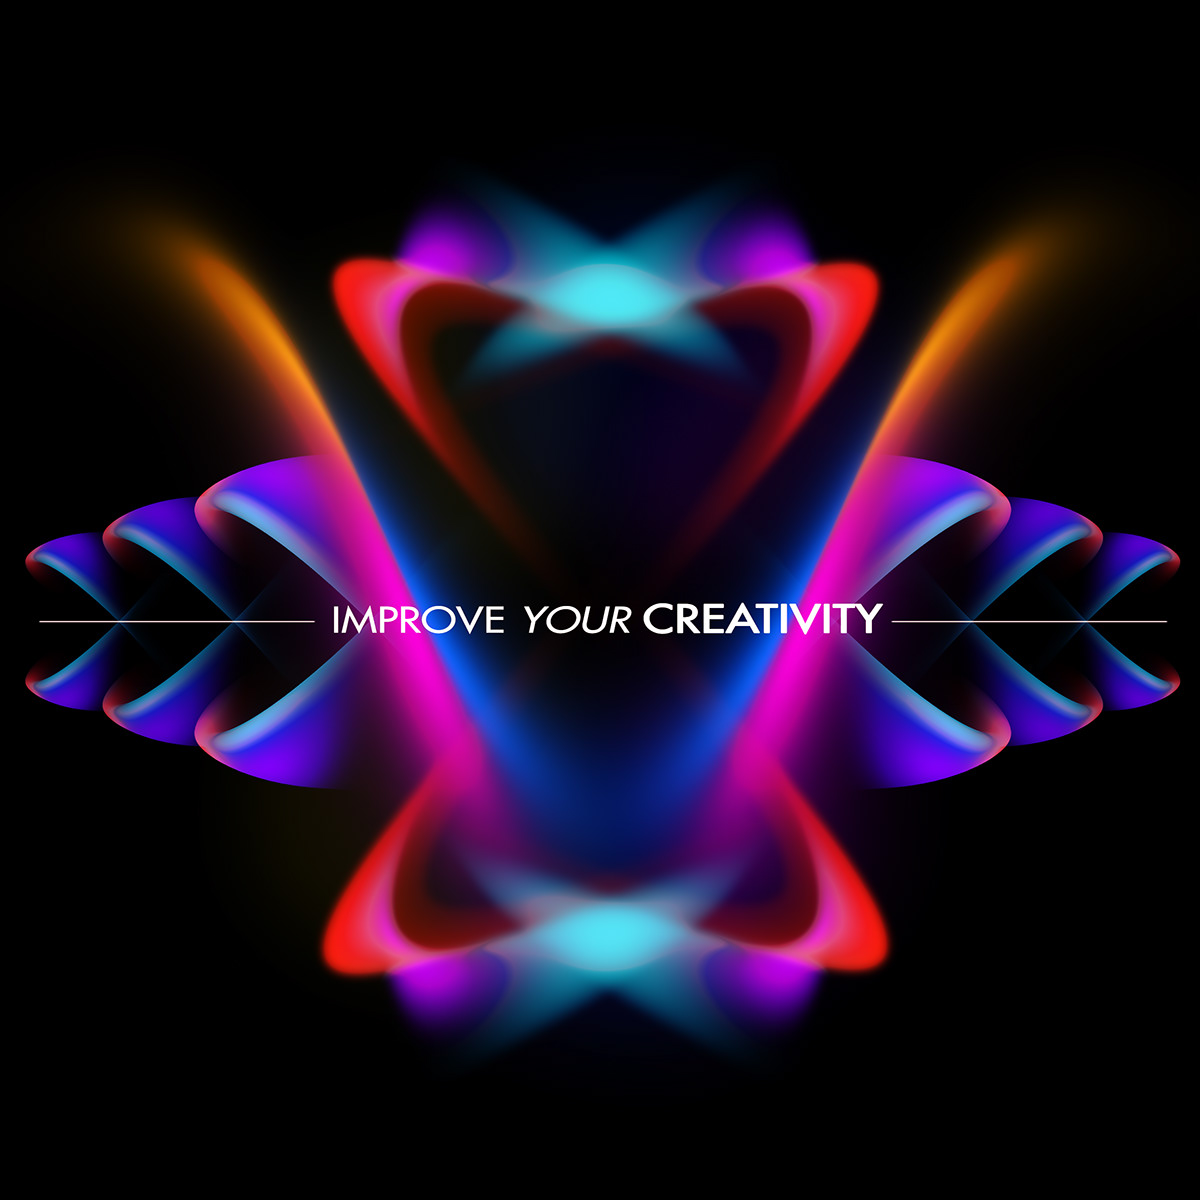 abstract shapes photoshop cs6 gradient improve your Creativity graphic design drawingdigital art